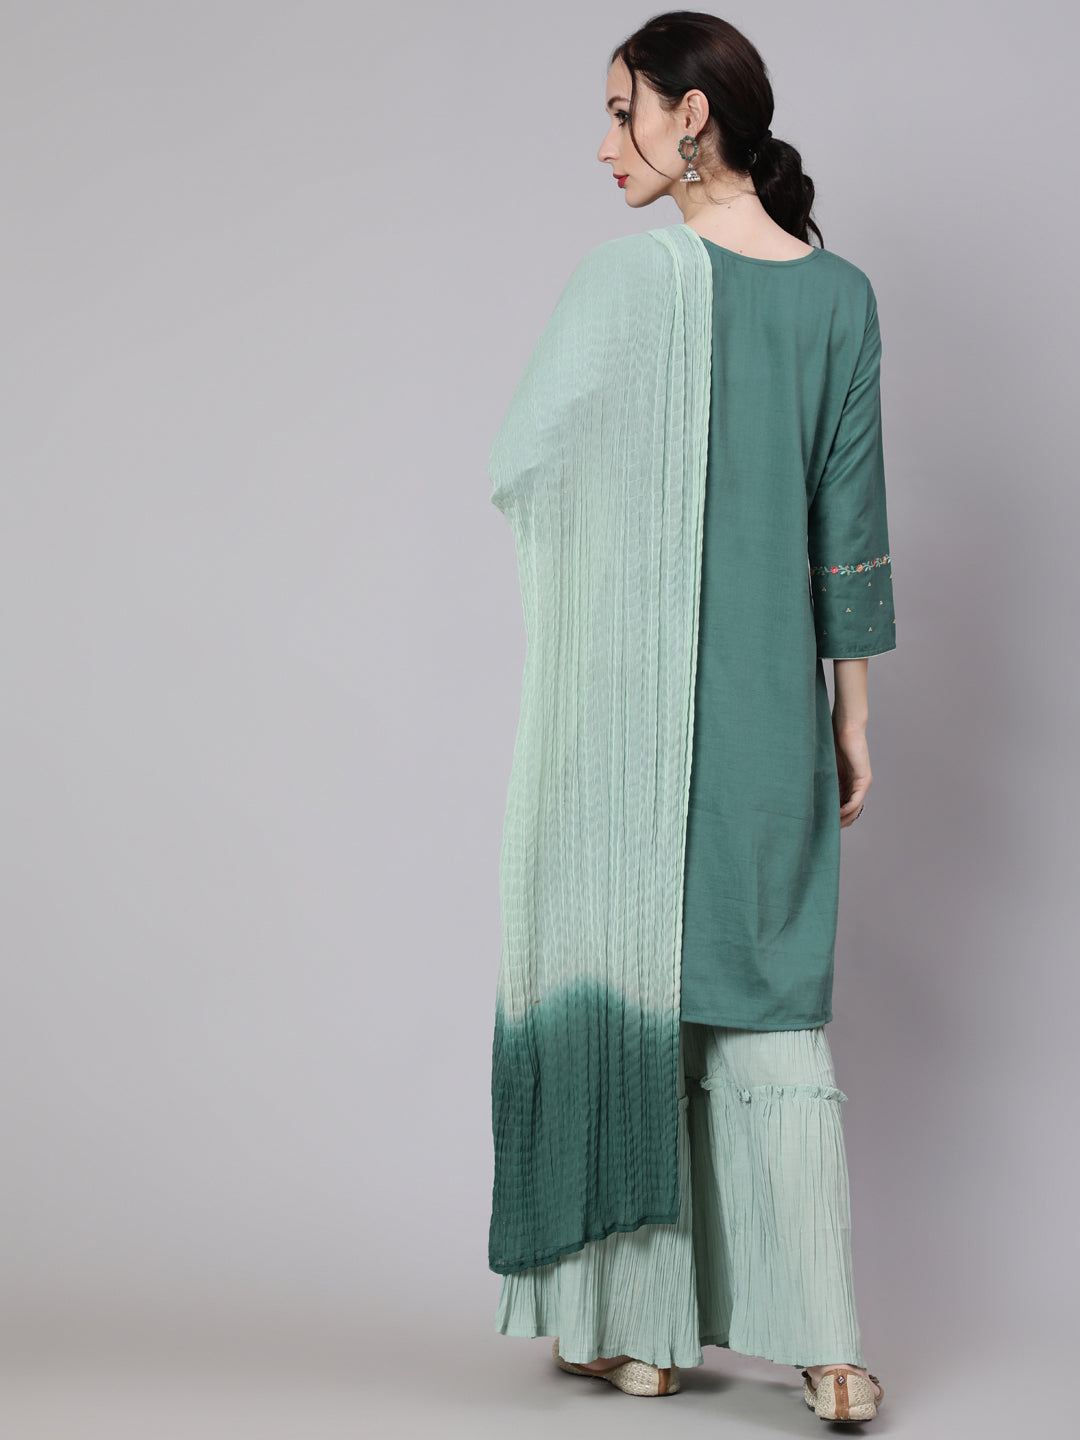 Women's Green Embellished Straight Kurta Sharara With Dupatta - Aks